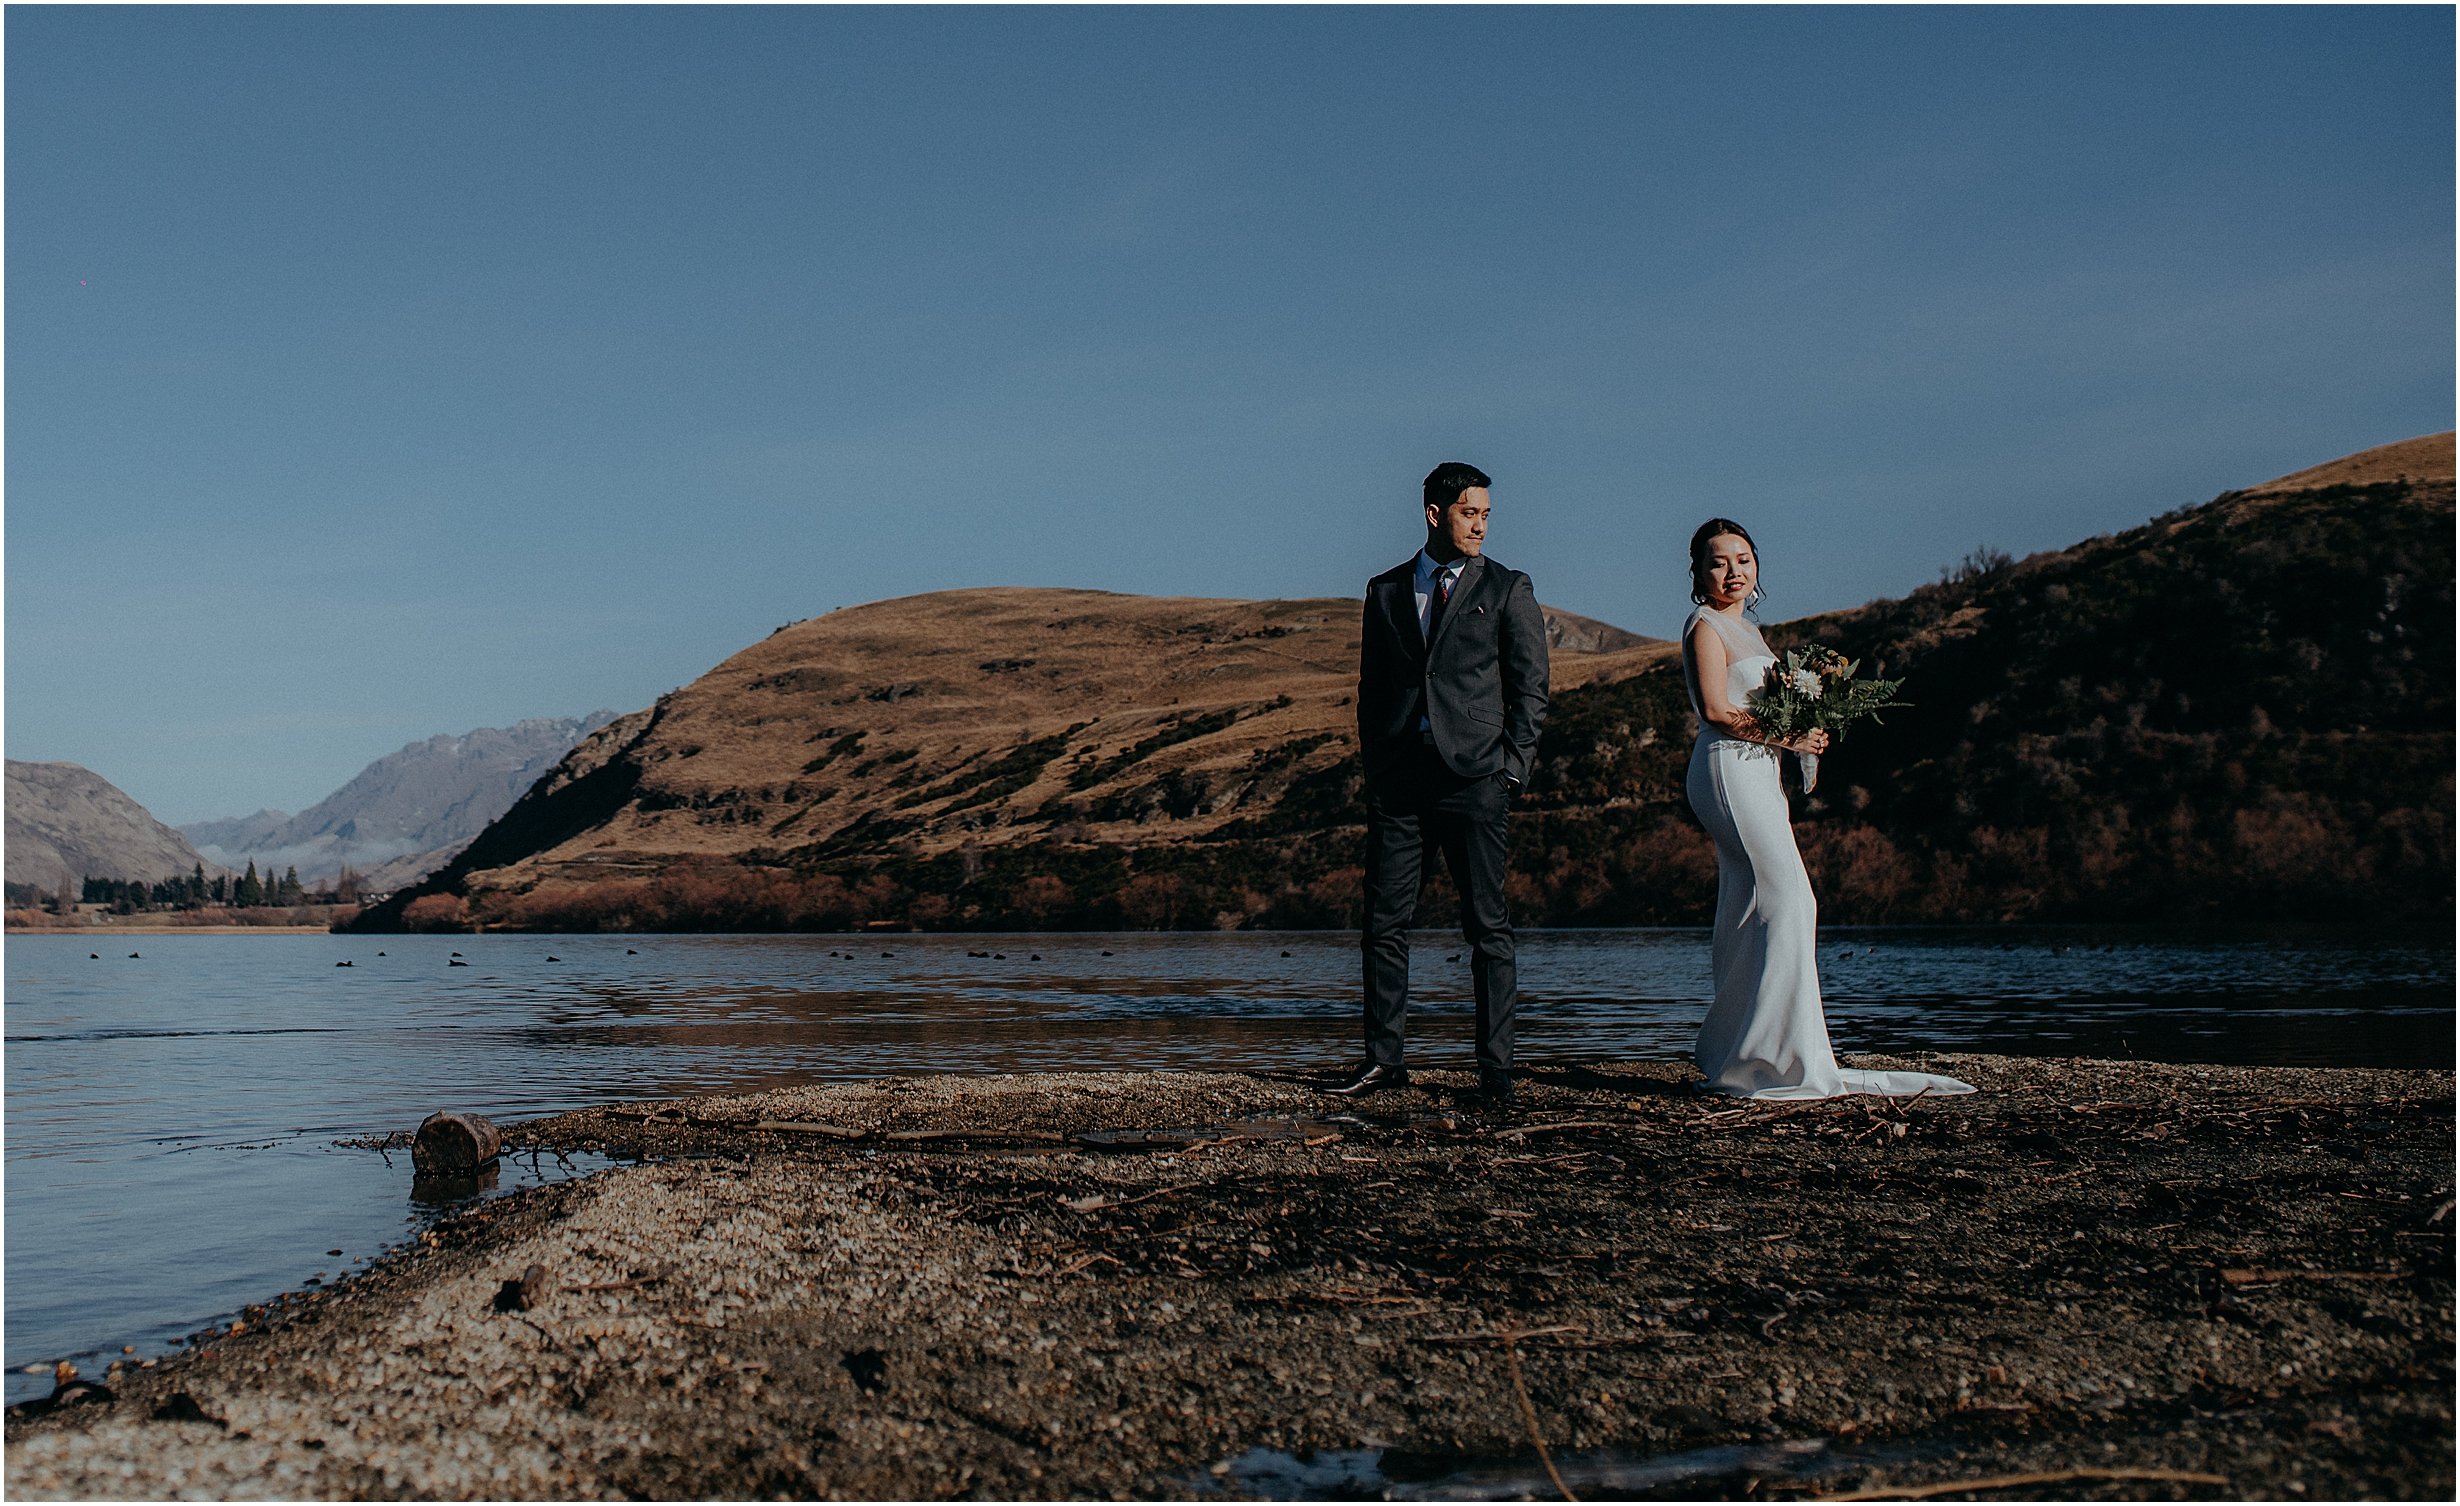 Kouki+Auckland+Wedding+Photographer+New+Zealand+Queenstown+Wedding+Prewedding+Elopement+NZ_0053.jpg